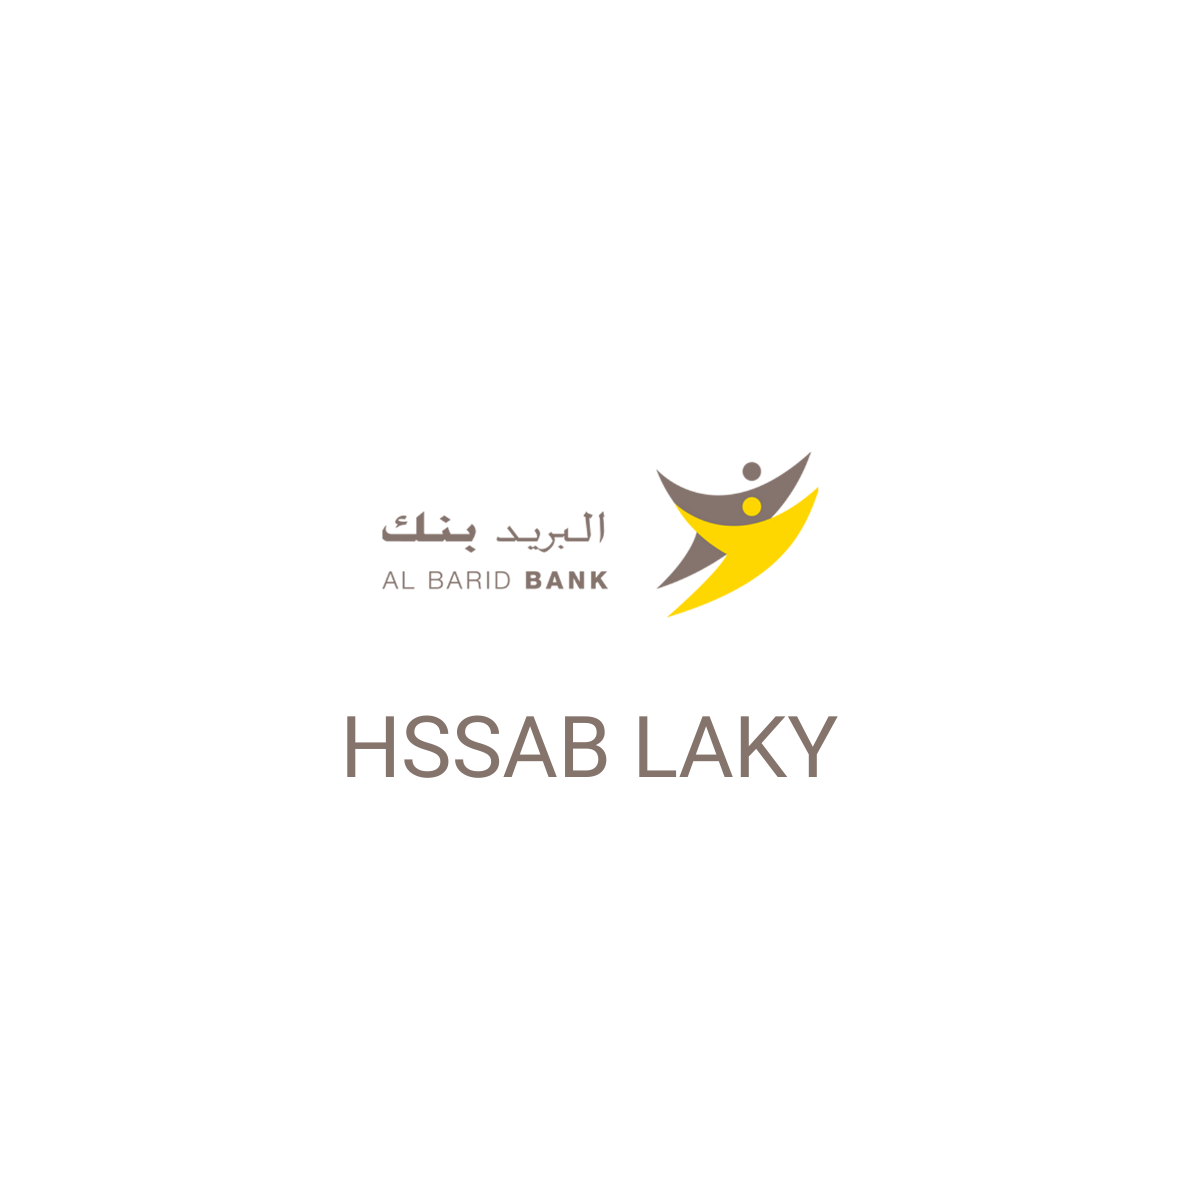 HSSAB LAKY